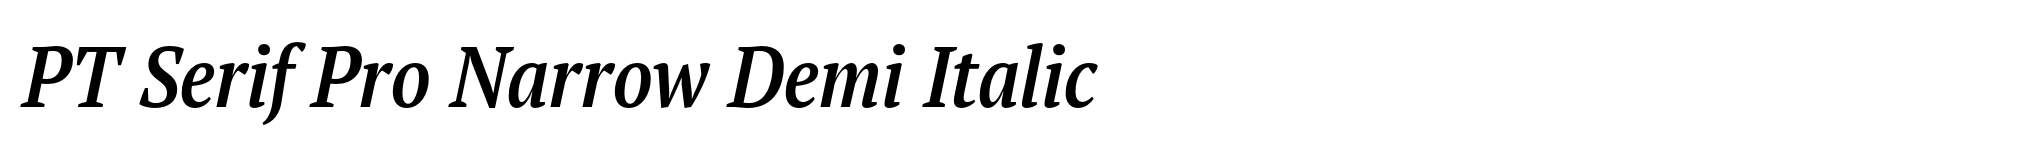 PT Serif Pro Narrow Demi Italic image